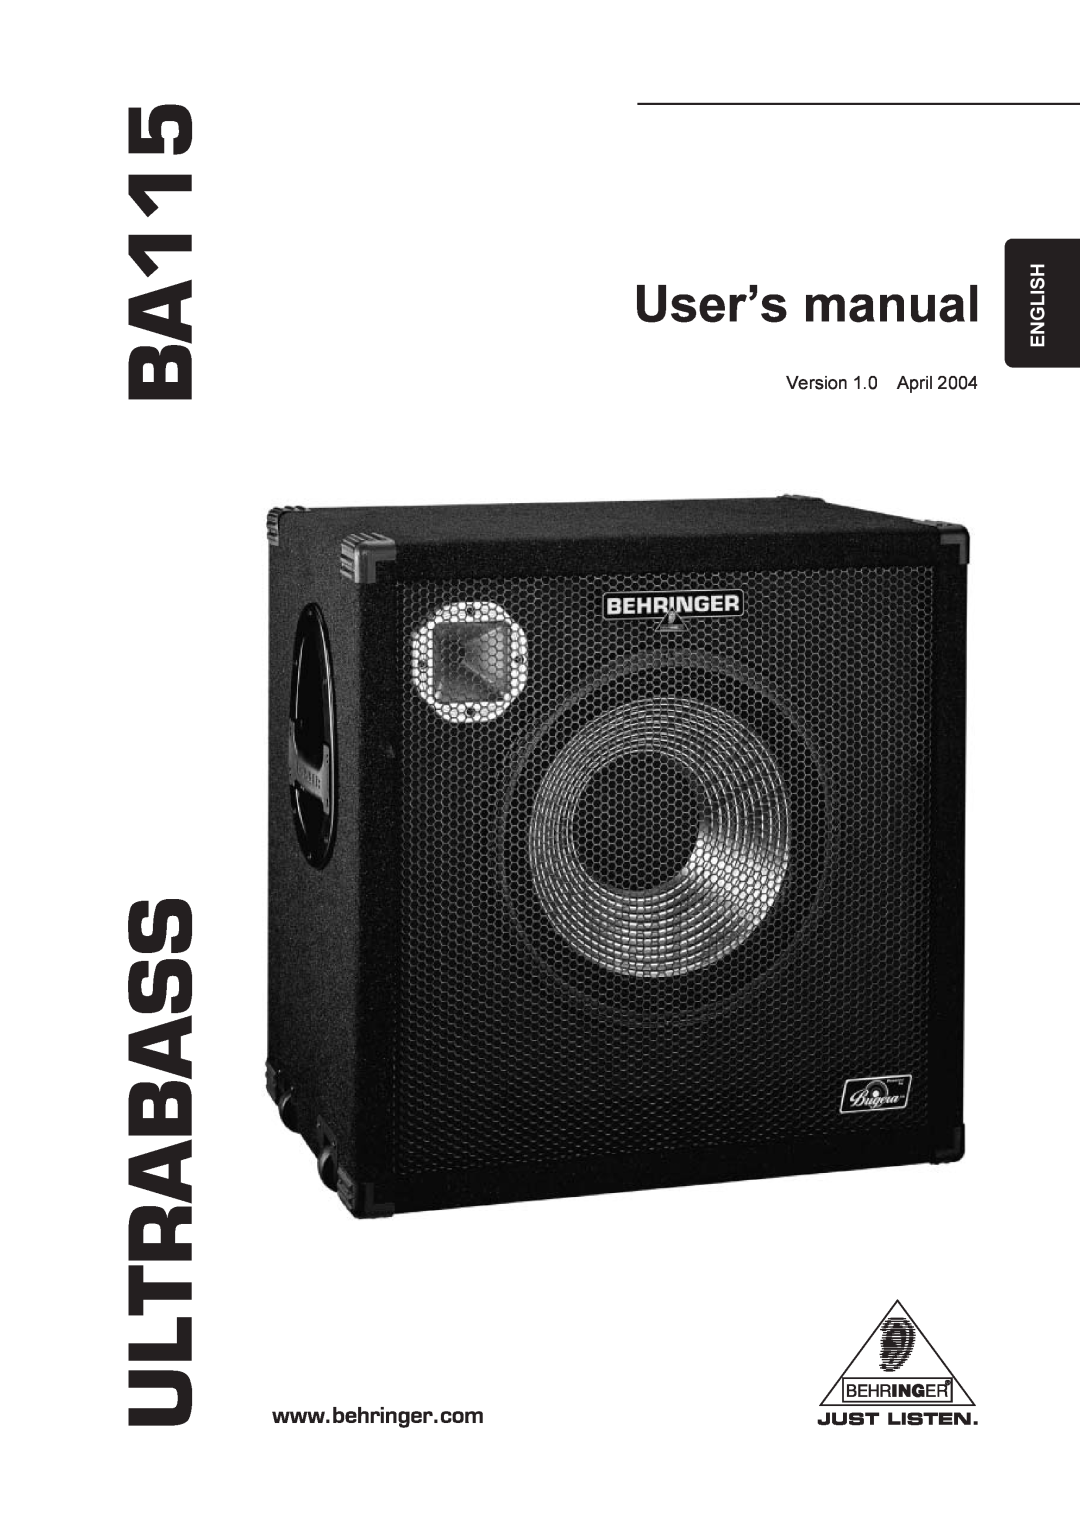 Behringer manual BA115 ULTRABASS, English 